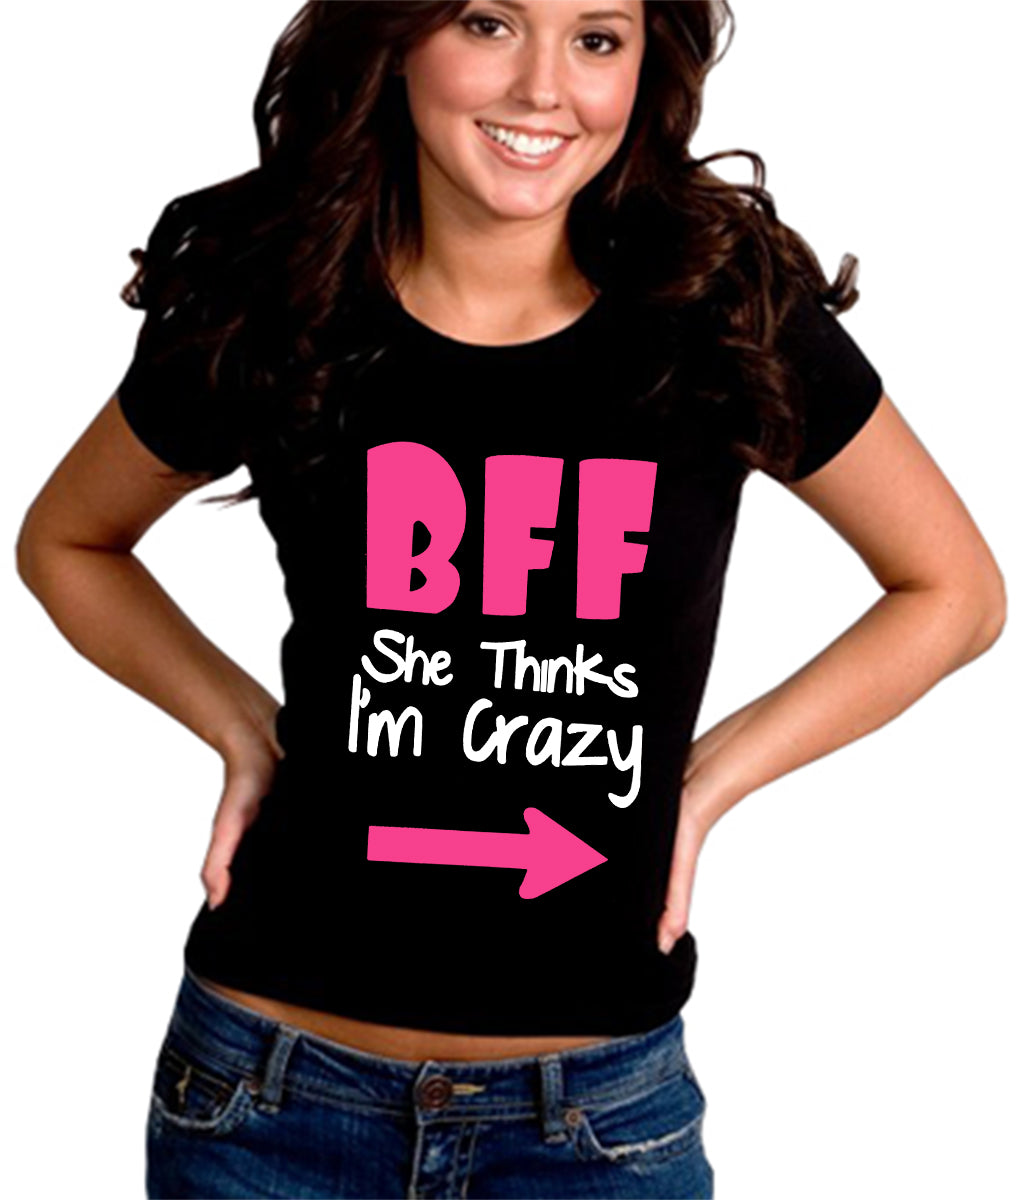 BFF - She Thinks I'm Crazy Girl's T-Shirt